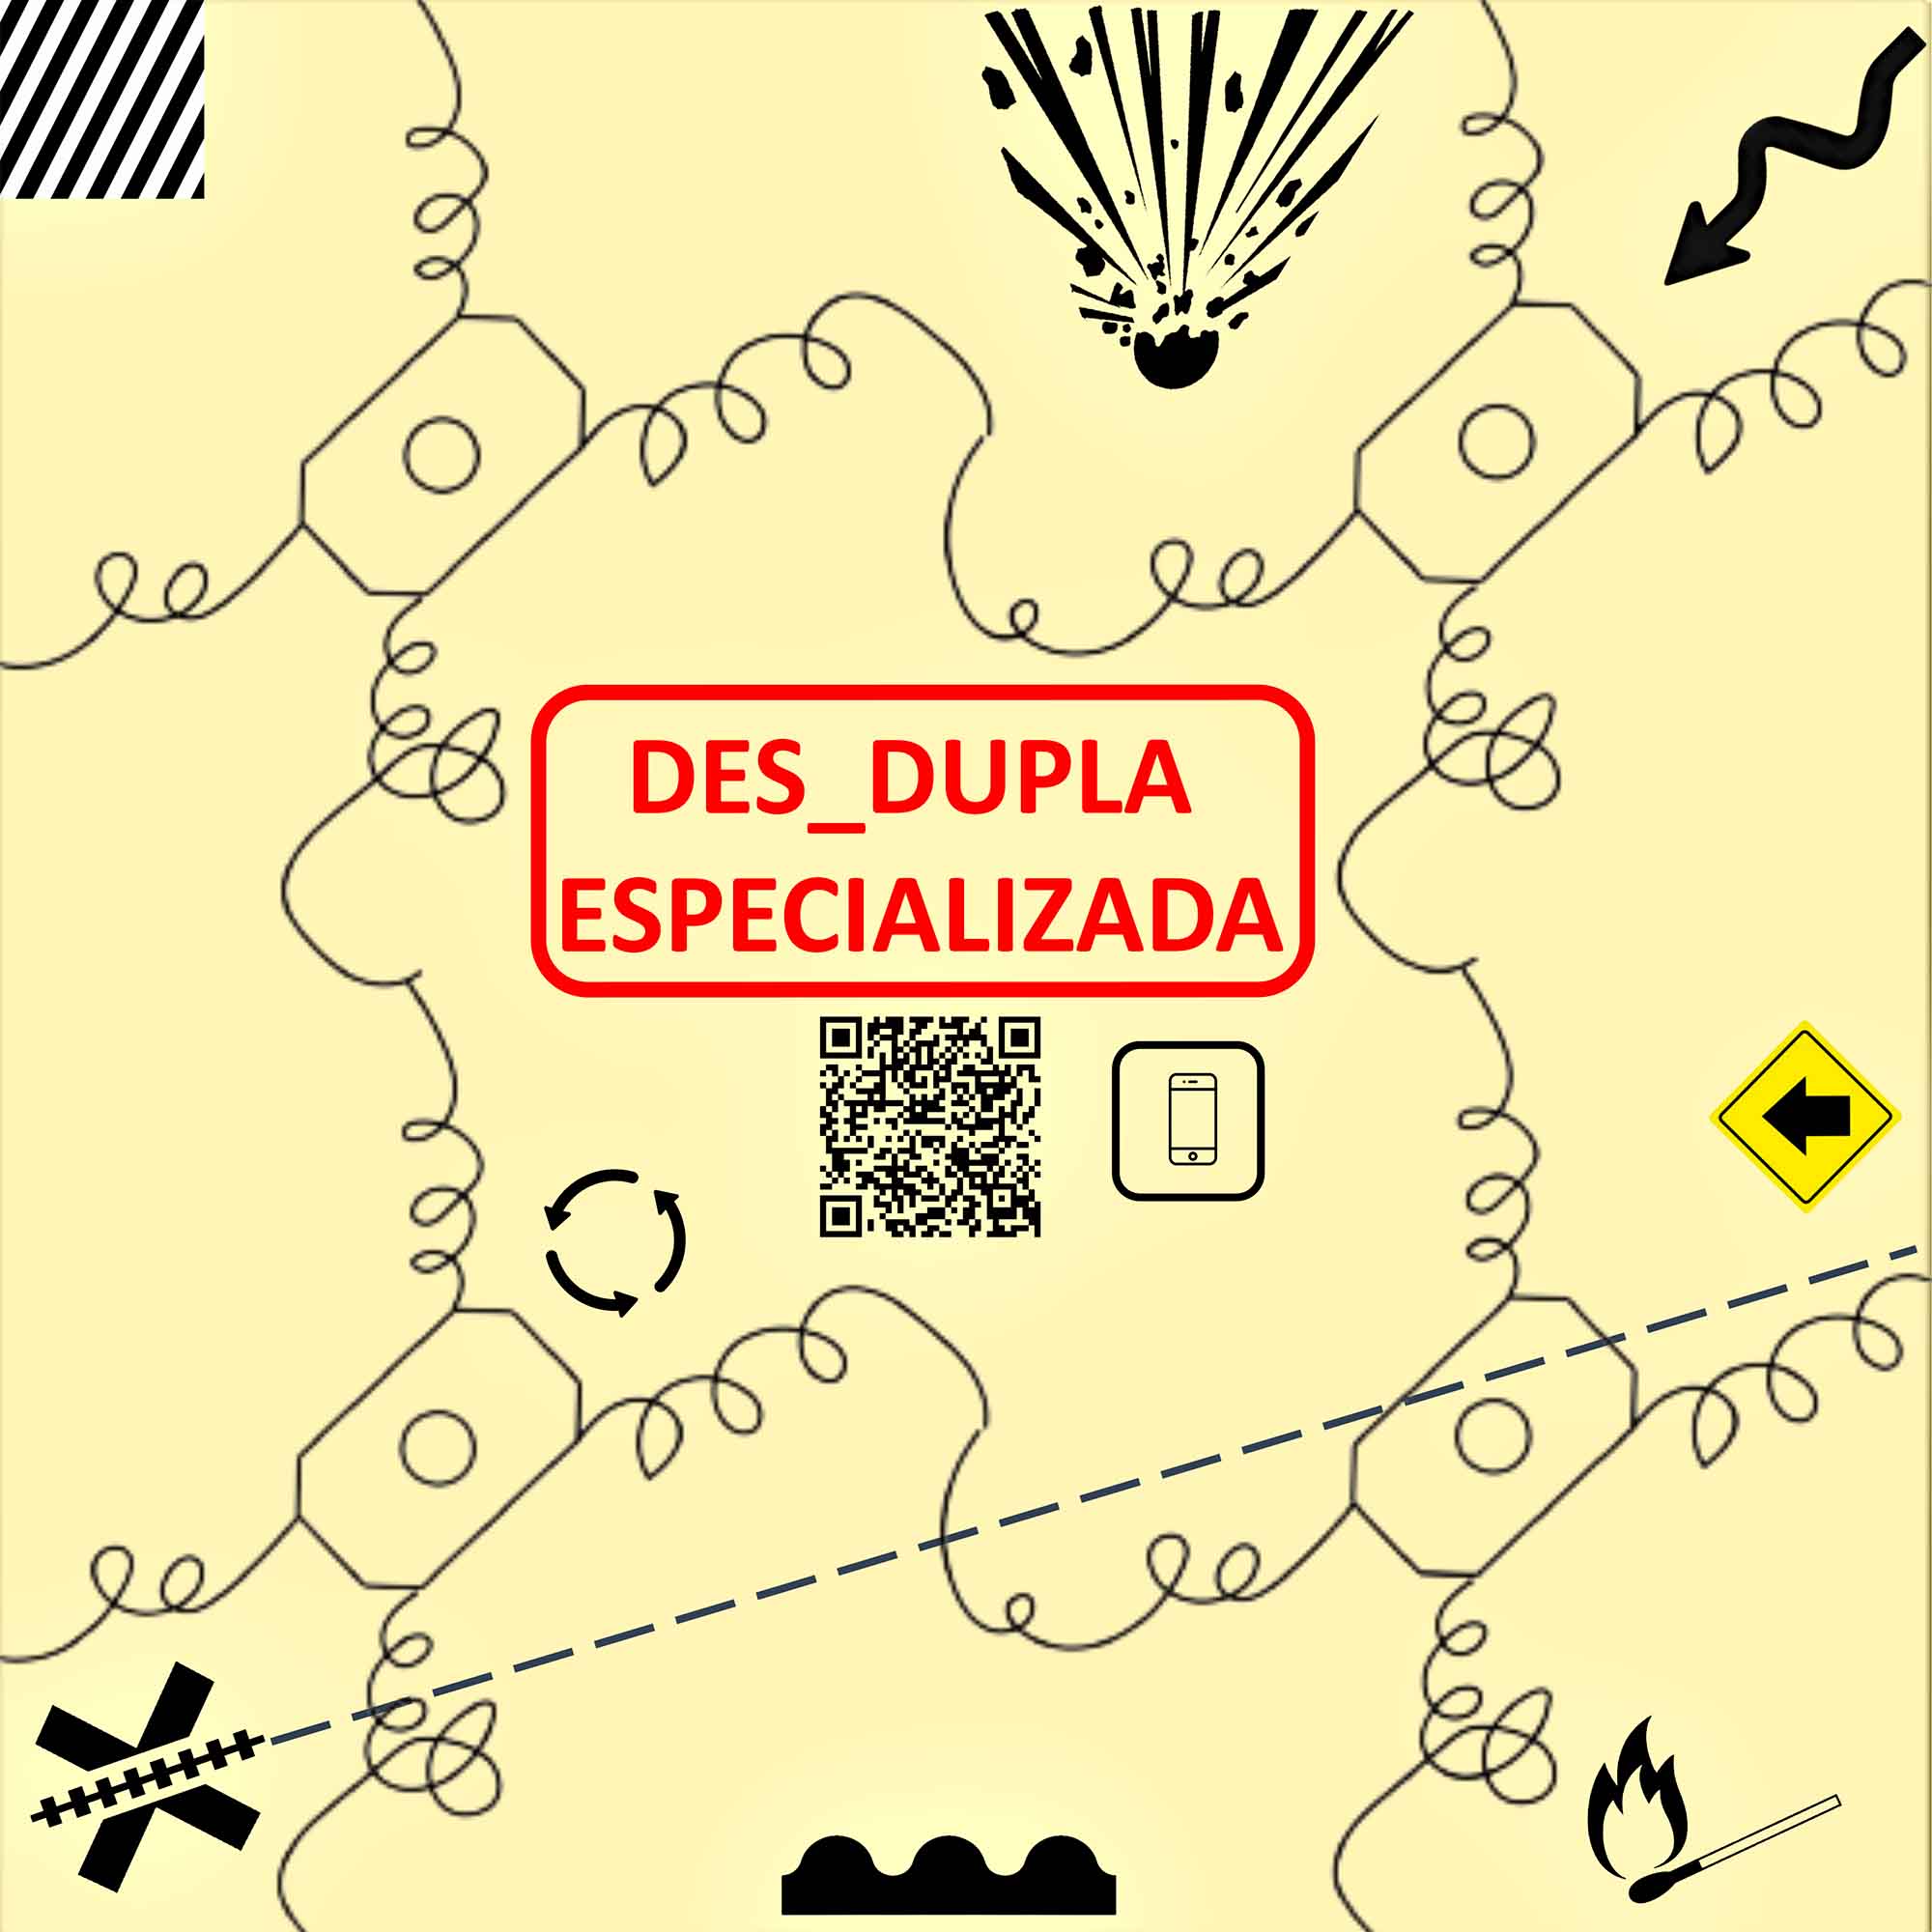 rioecultura : EXPO Des_Dupla Especializada : Real Galeria de Arte Contemporânea